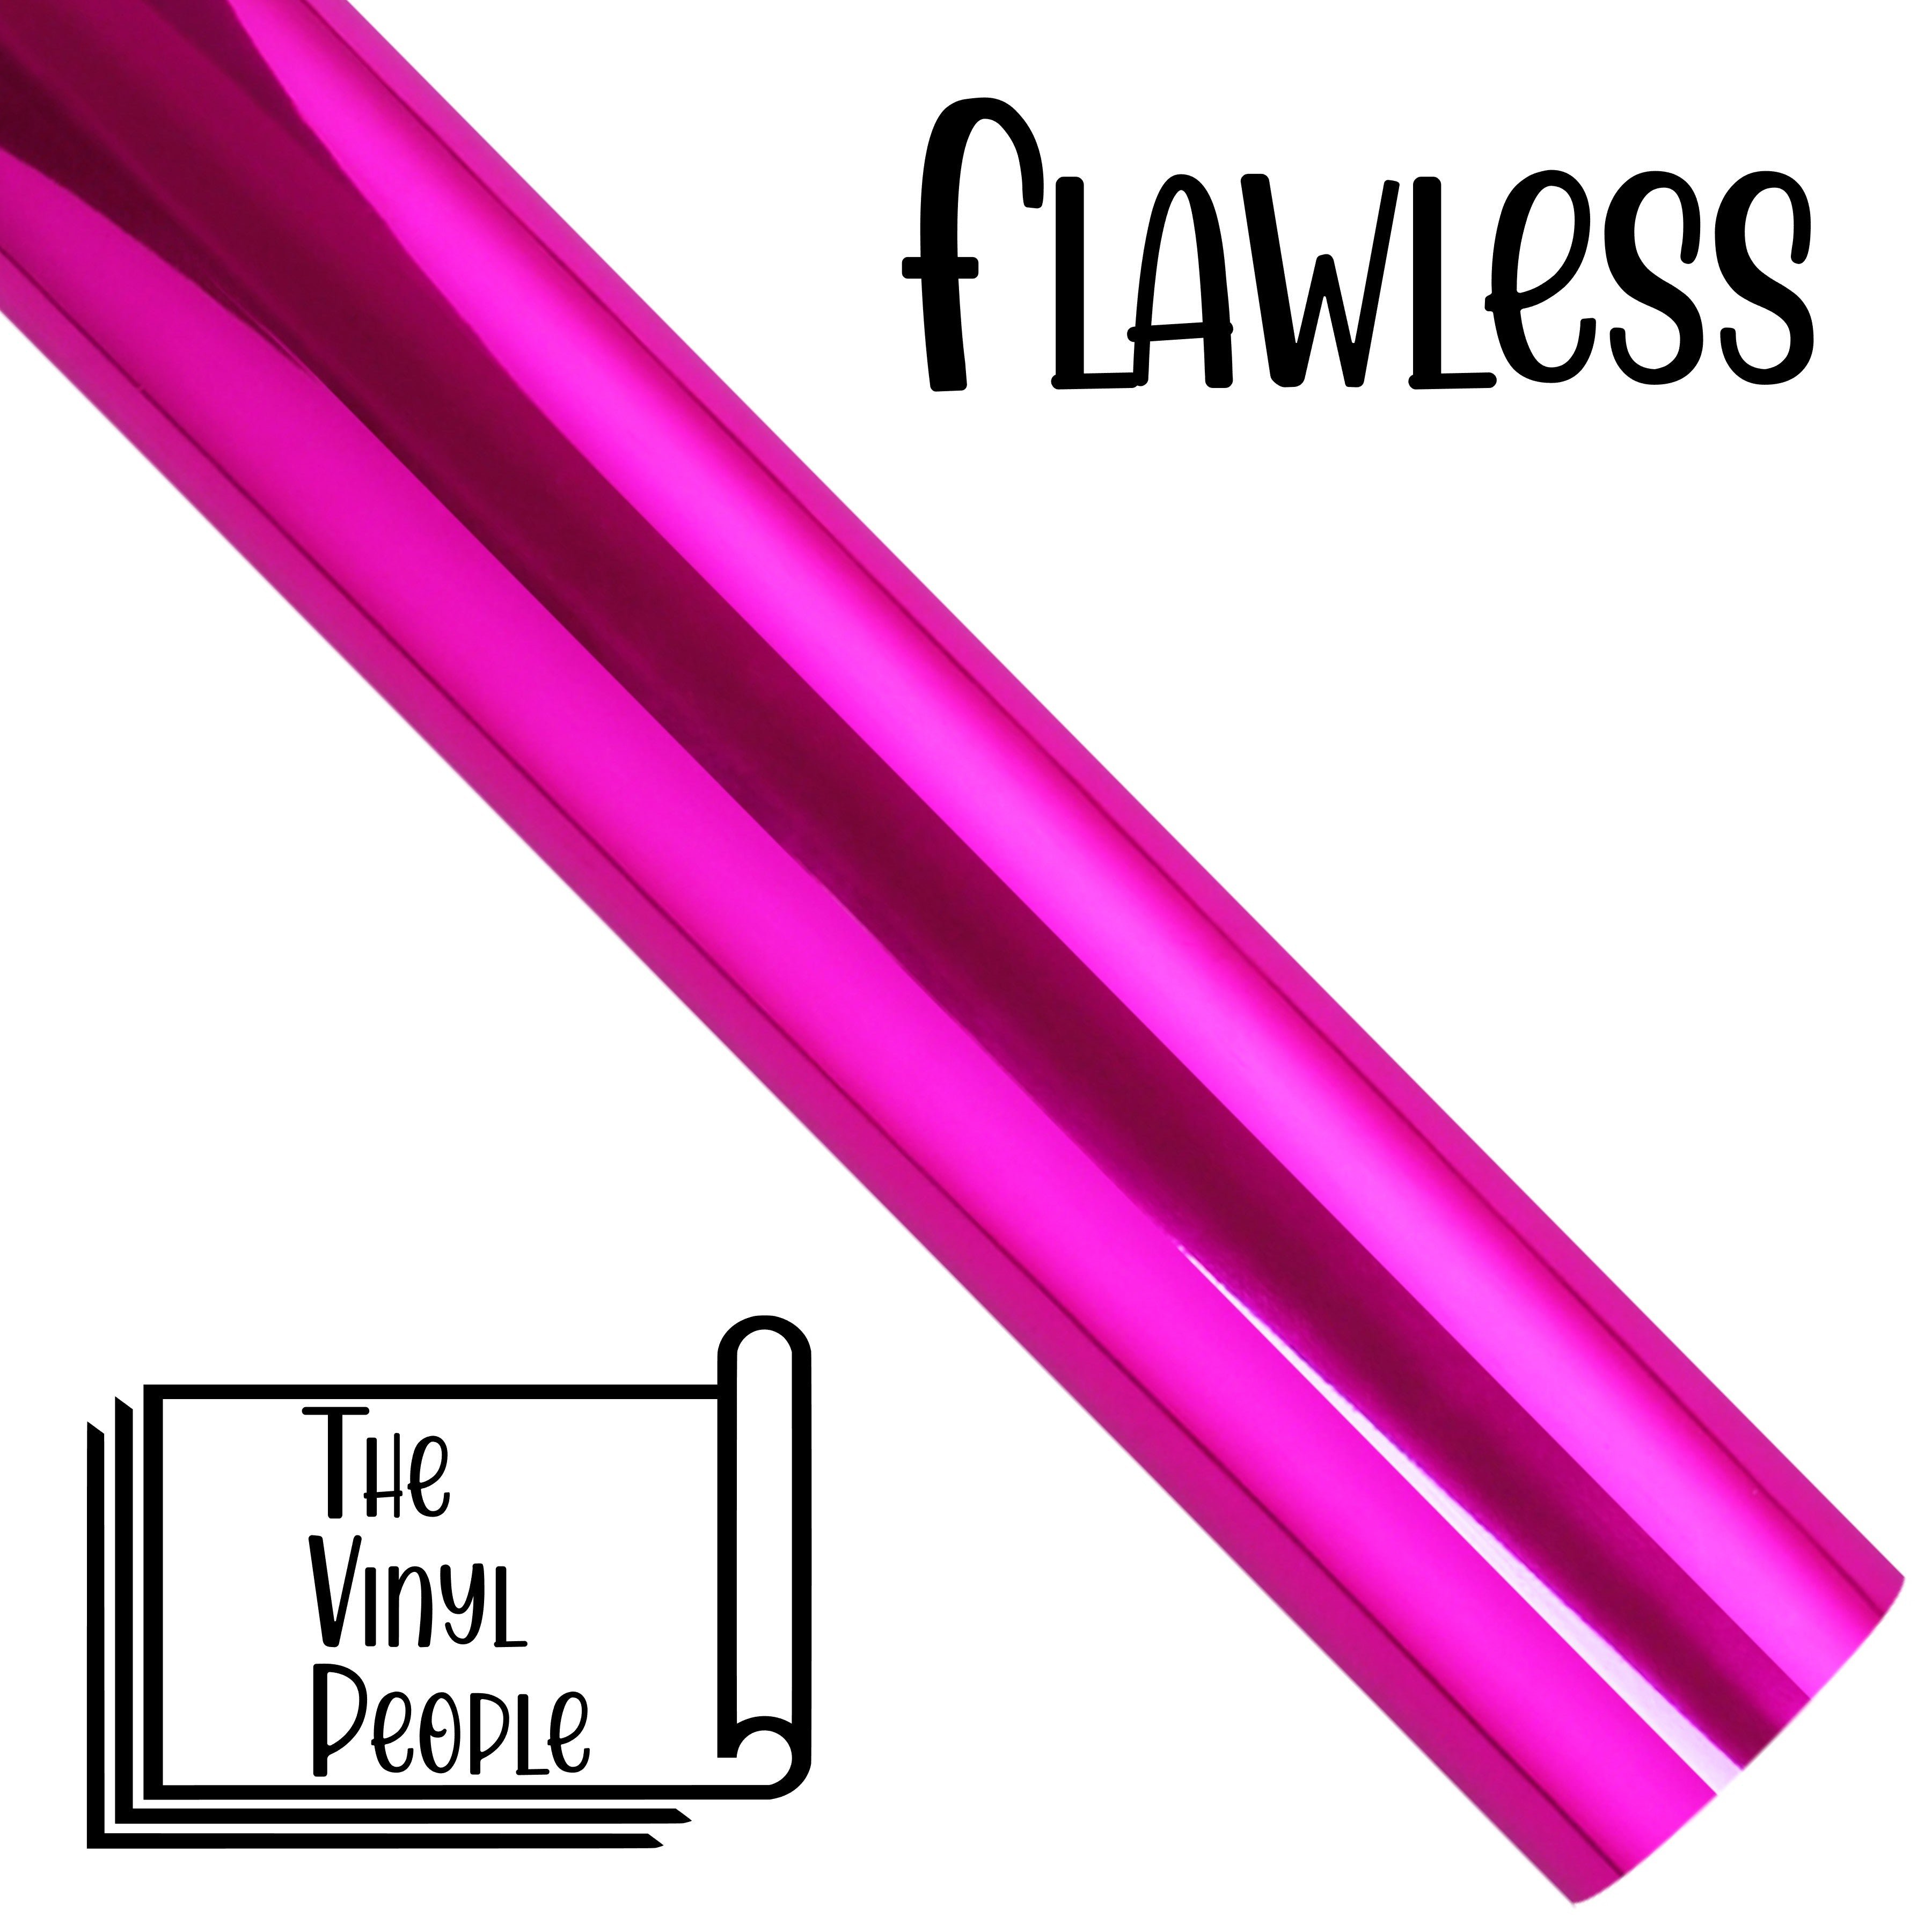 Flawless - 12" x 24" roll